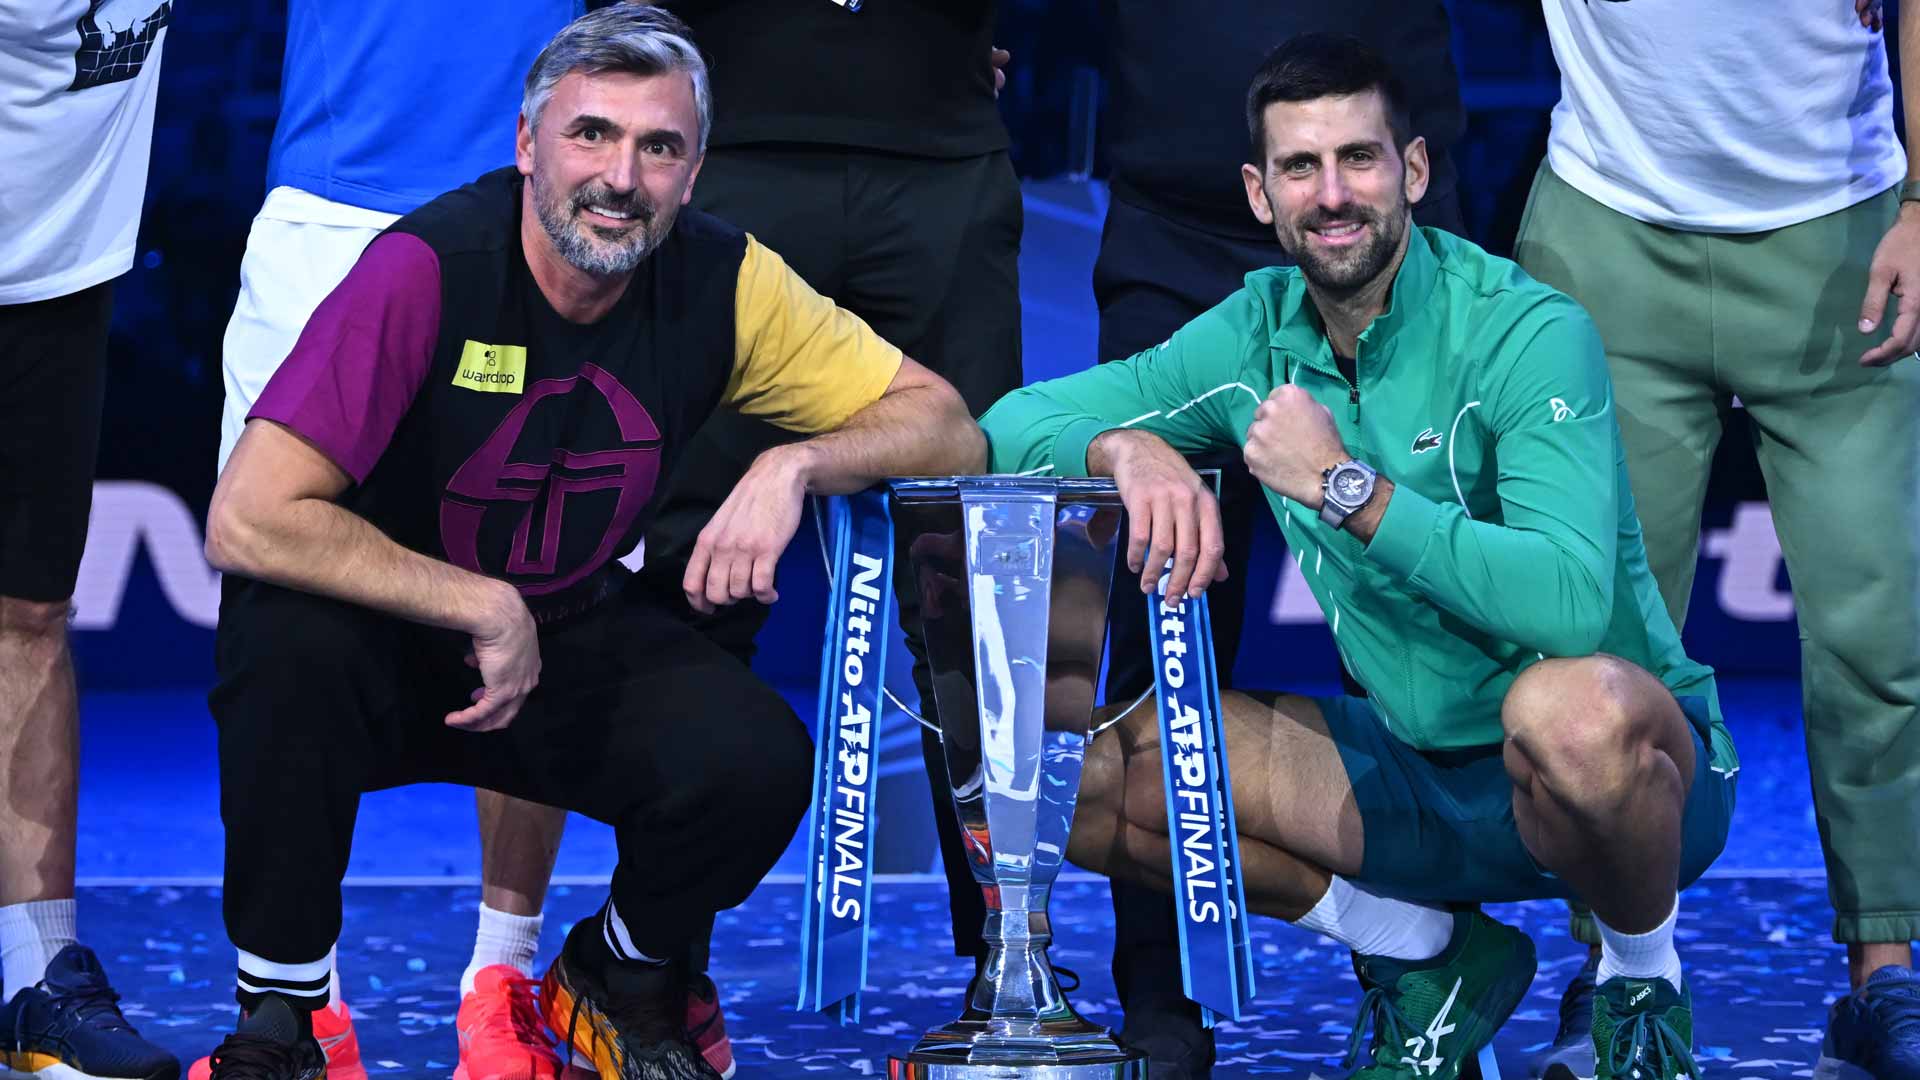 Goran Ivanisevic and Novak Djokovic celebrate after the World No. 1 defeated Jannik Sinner on Sunday evening in Turin.